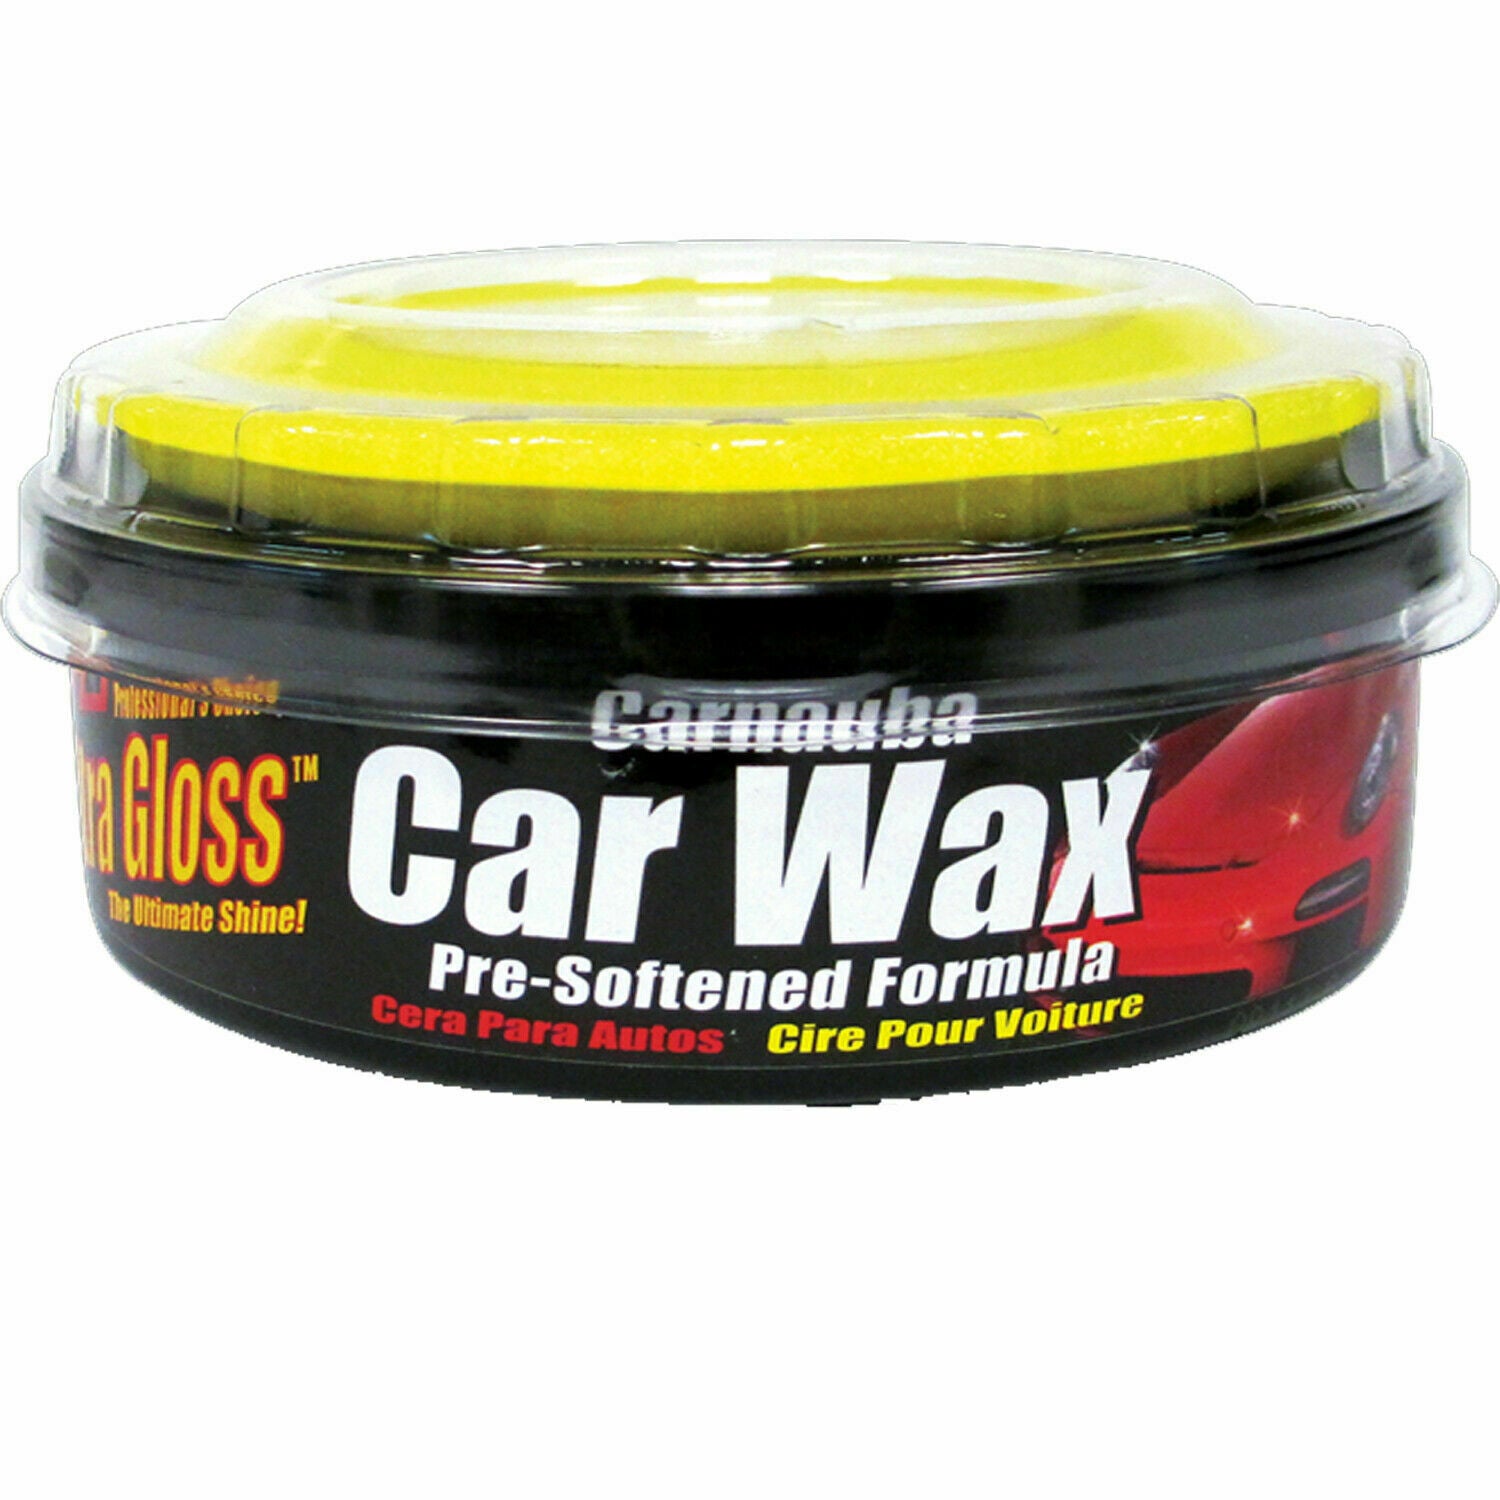 HS Ultra Gloss Car Wax Paste Carnauba 16.5oz. – MZPartsMiami